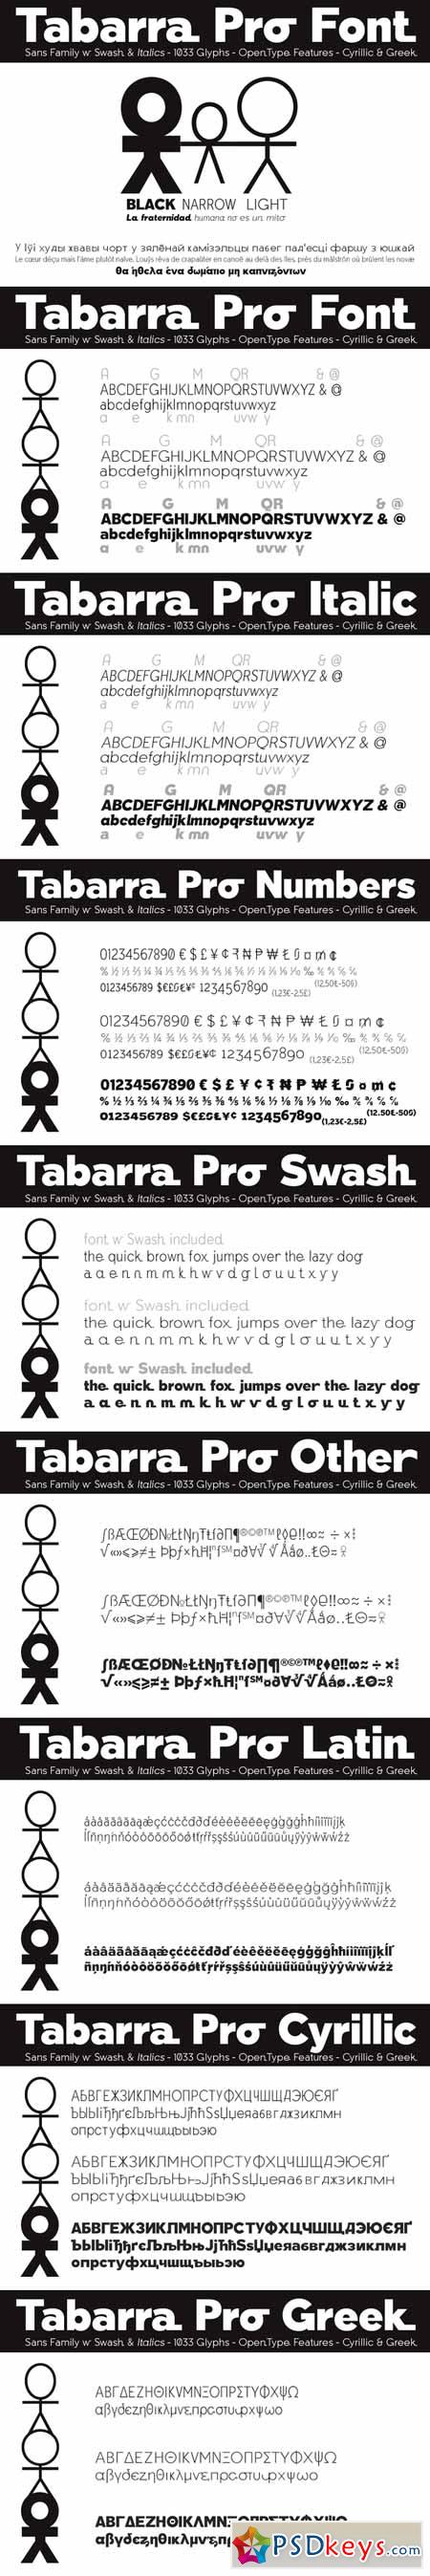 Tabarra Pro Fonts 380326